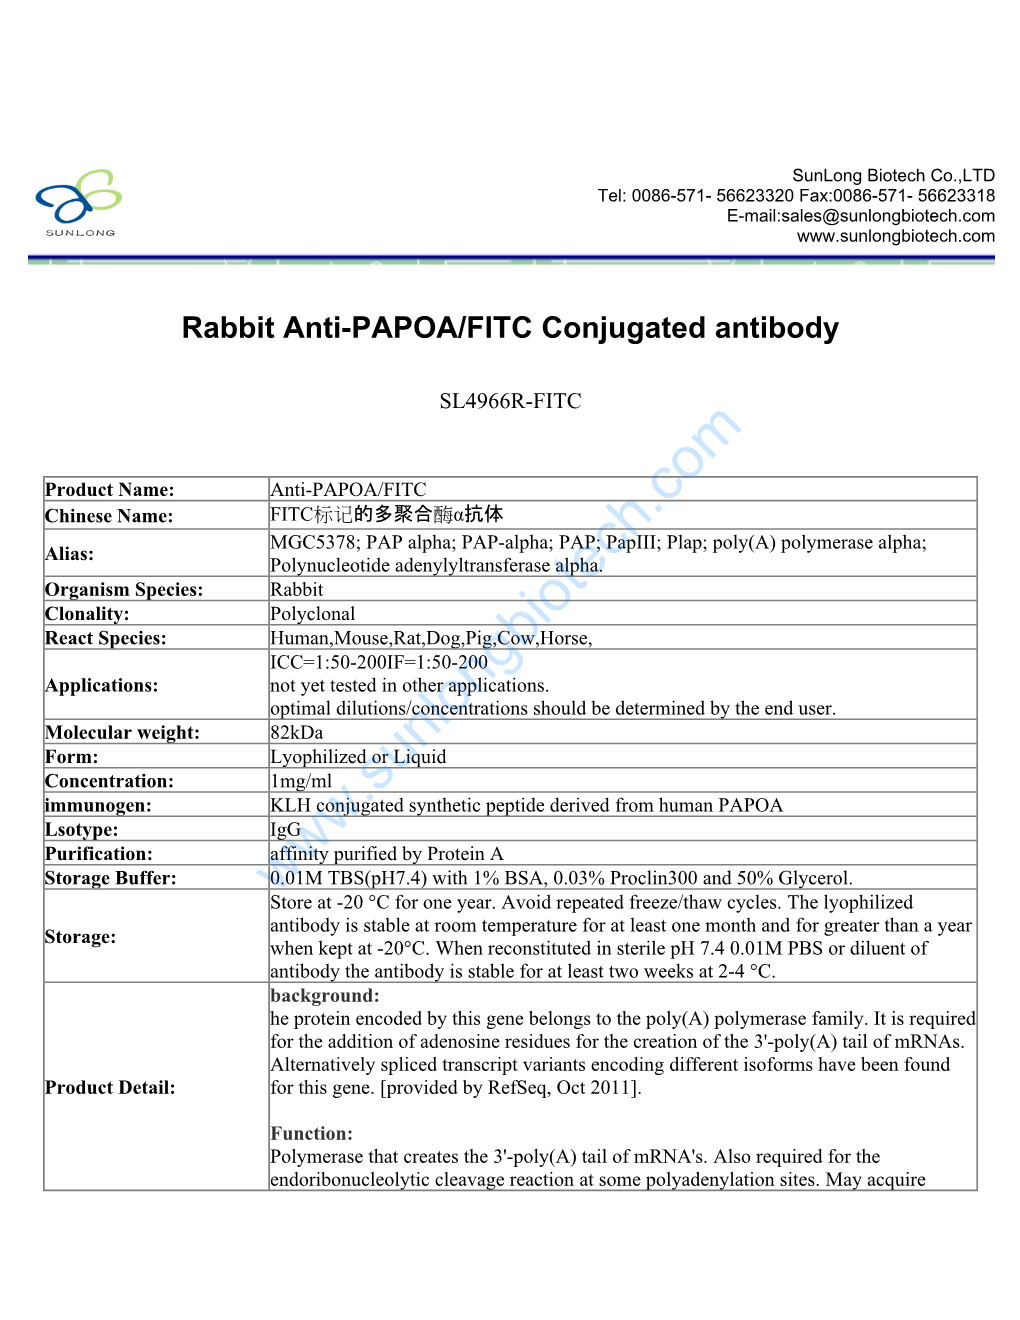 Rabbit Anti-PAPOA/FITC Conjugated Antibody-SL4966R-FITC